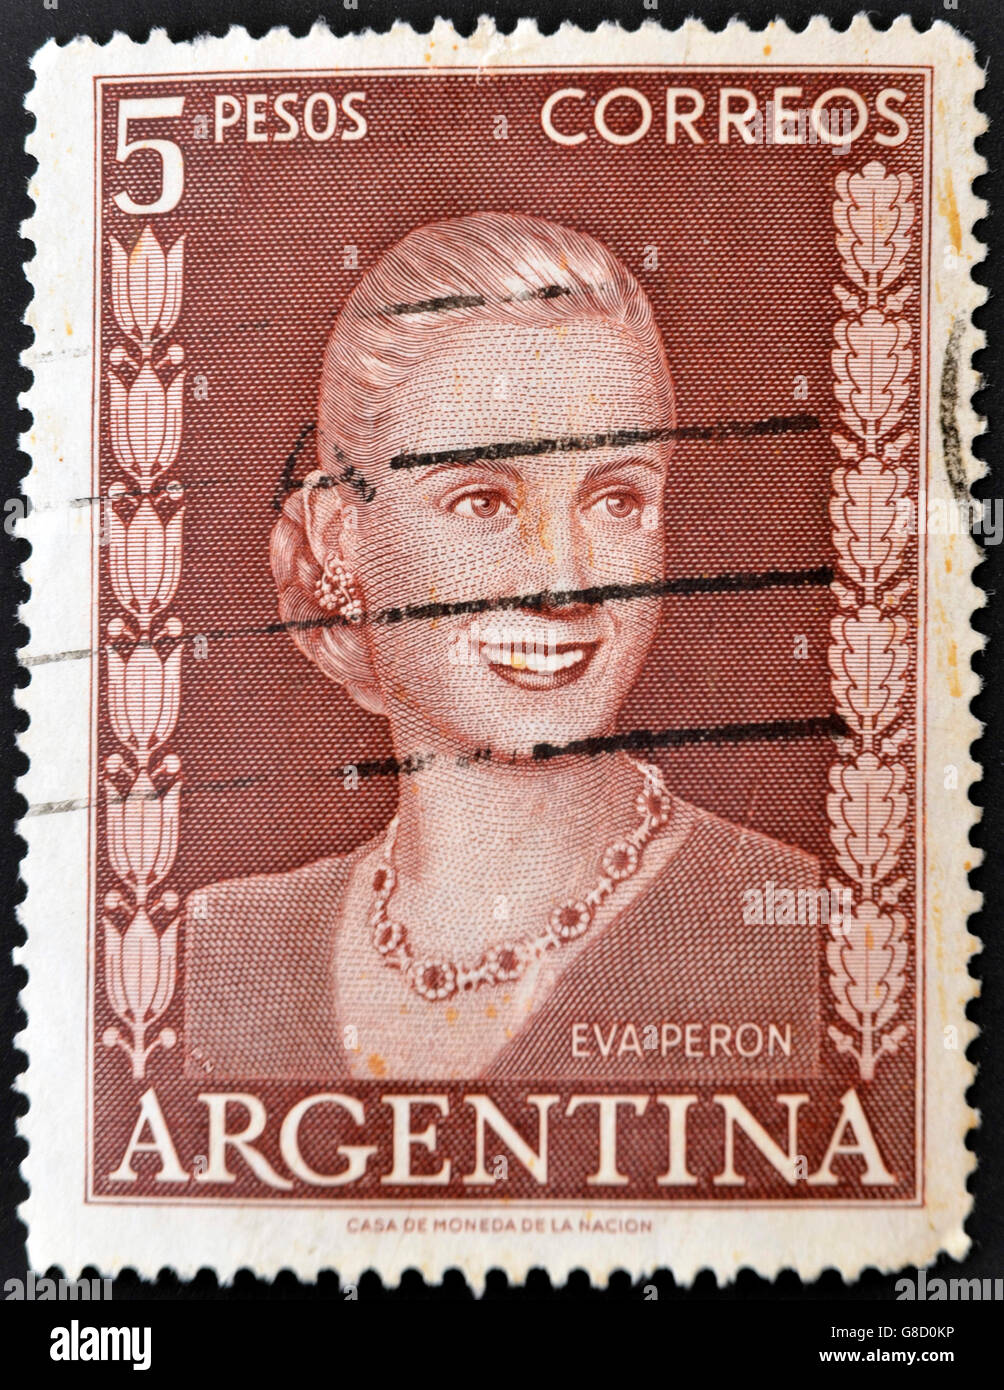 ARGENTINA - CIRCA 1948: A stamp printed in Argentina shows image of a political lider Eva Peron, circa 1948 Stock Photo